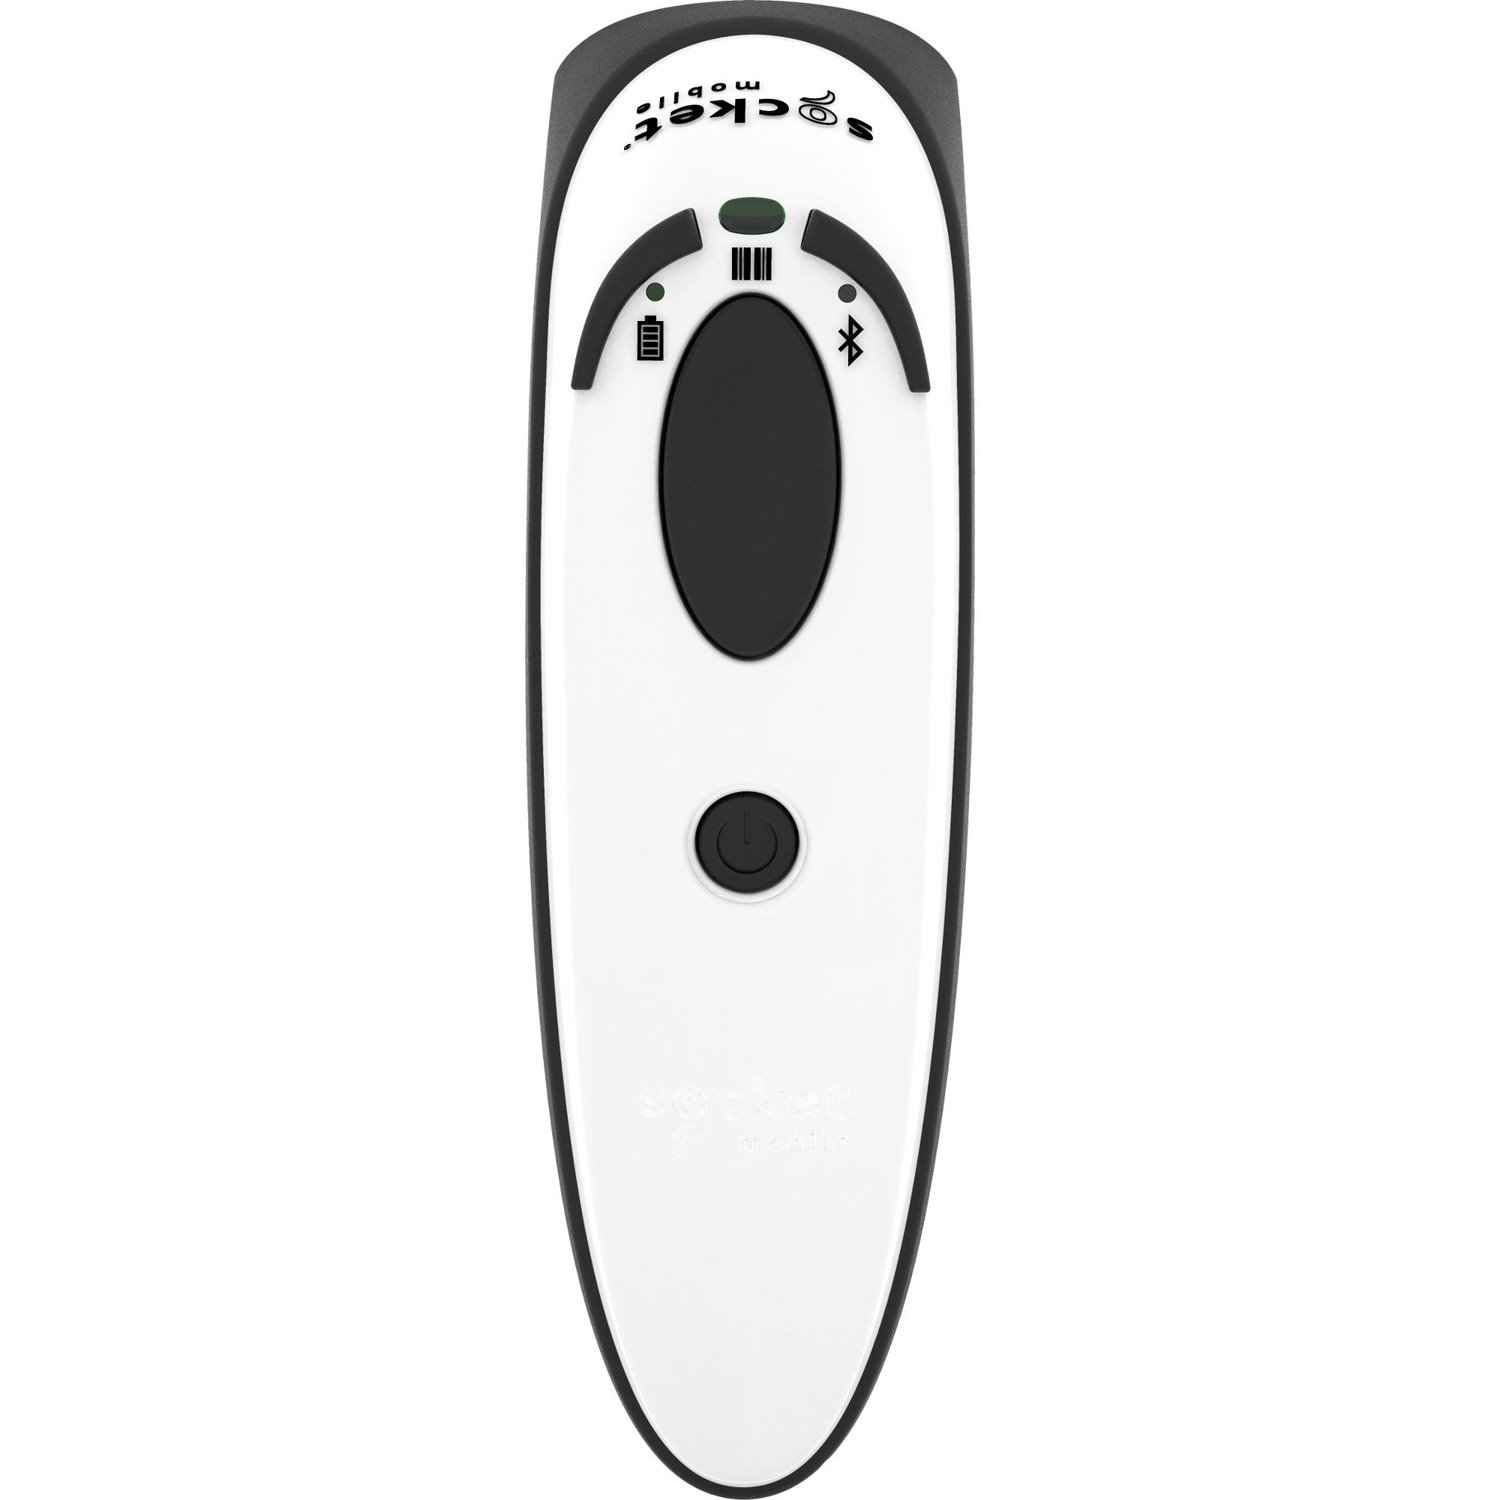 Socket Mobile DuraScan D740 Handheld Barcode Scanner - Wireless Connectivity - White